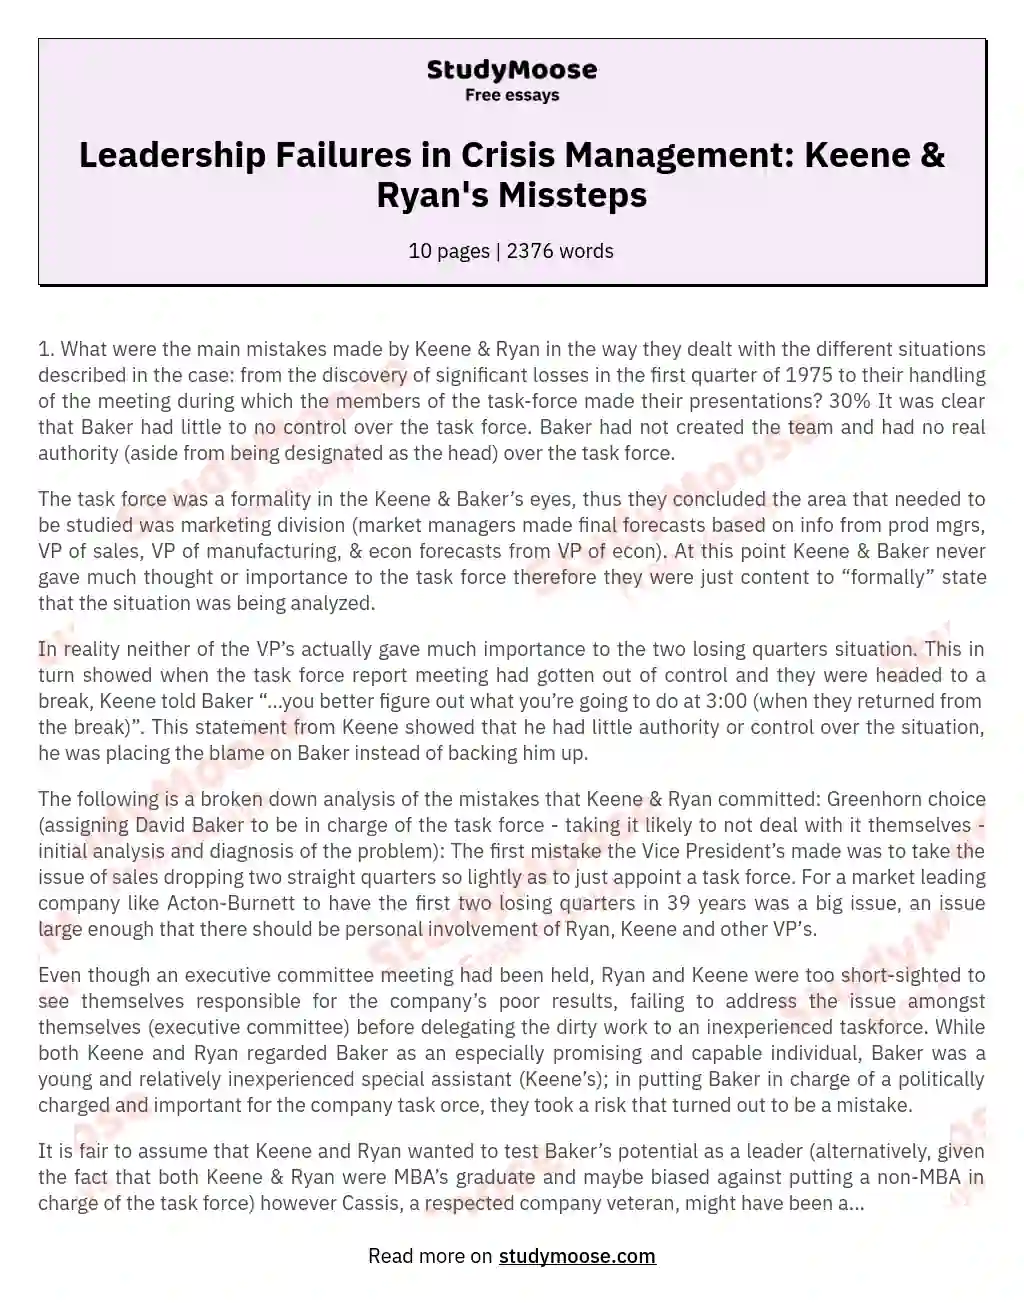 Leadership Failures in Crisis Management: Keene & Ryan's Missteps essay